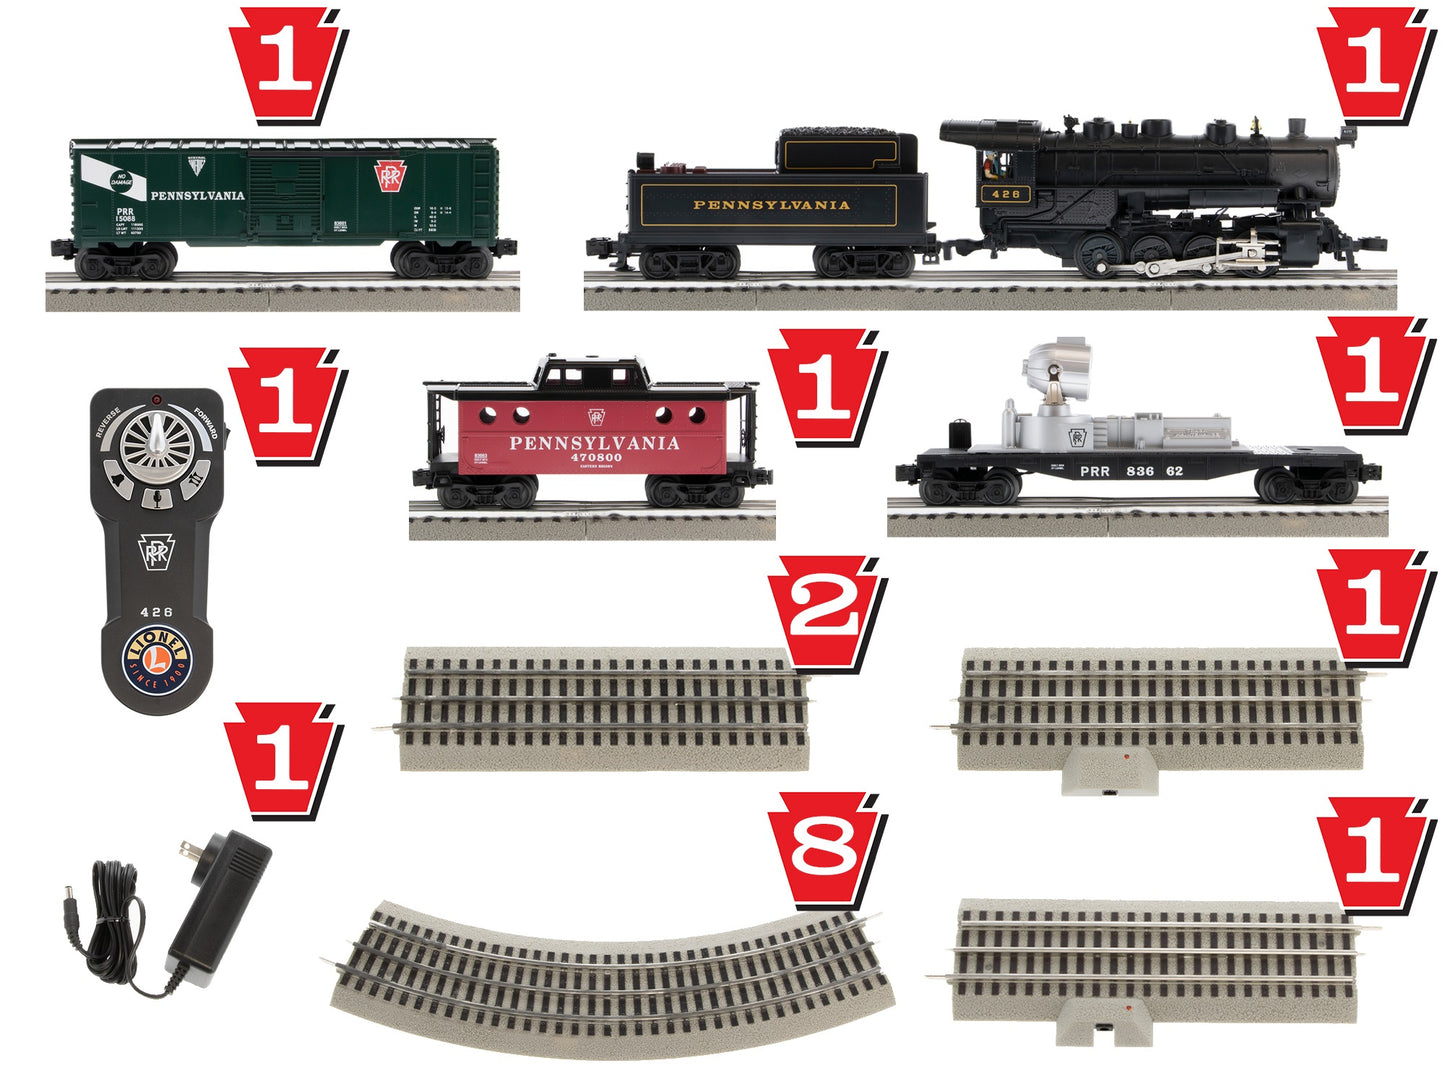 Model train set O scale Lionel Pennsylvania Keystone LionChief. All that is included.